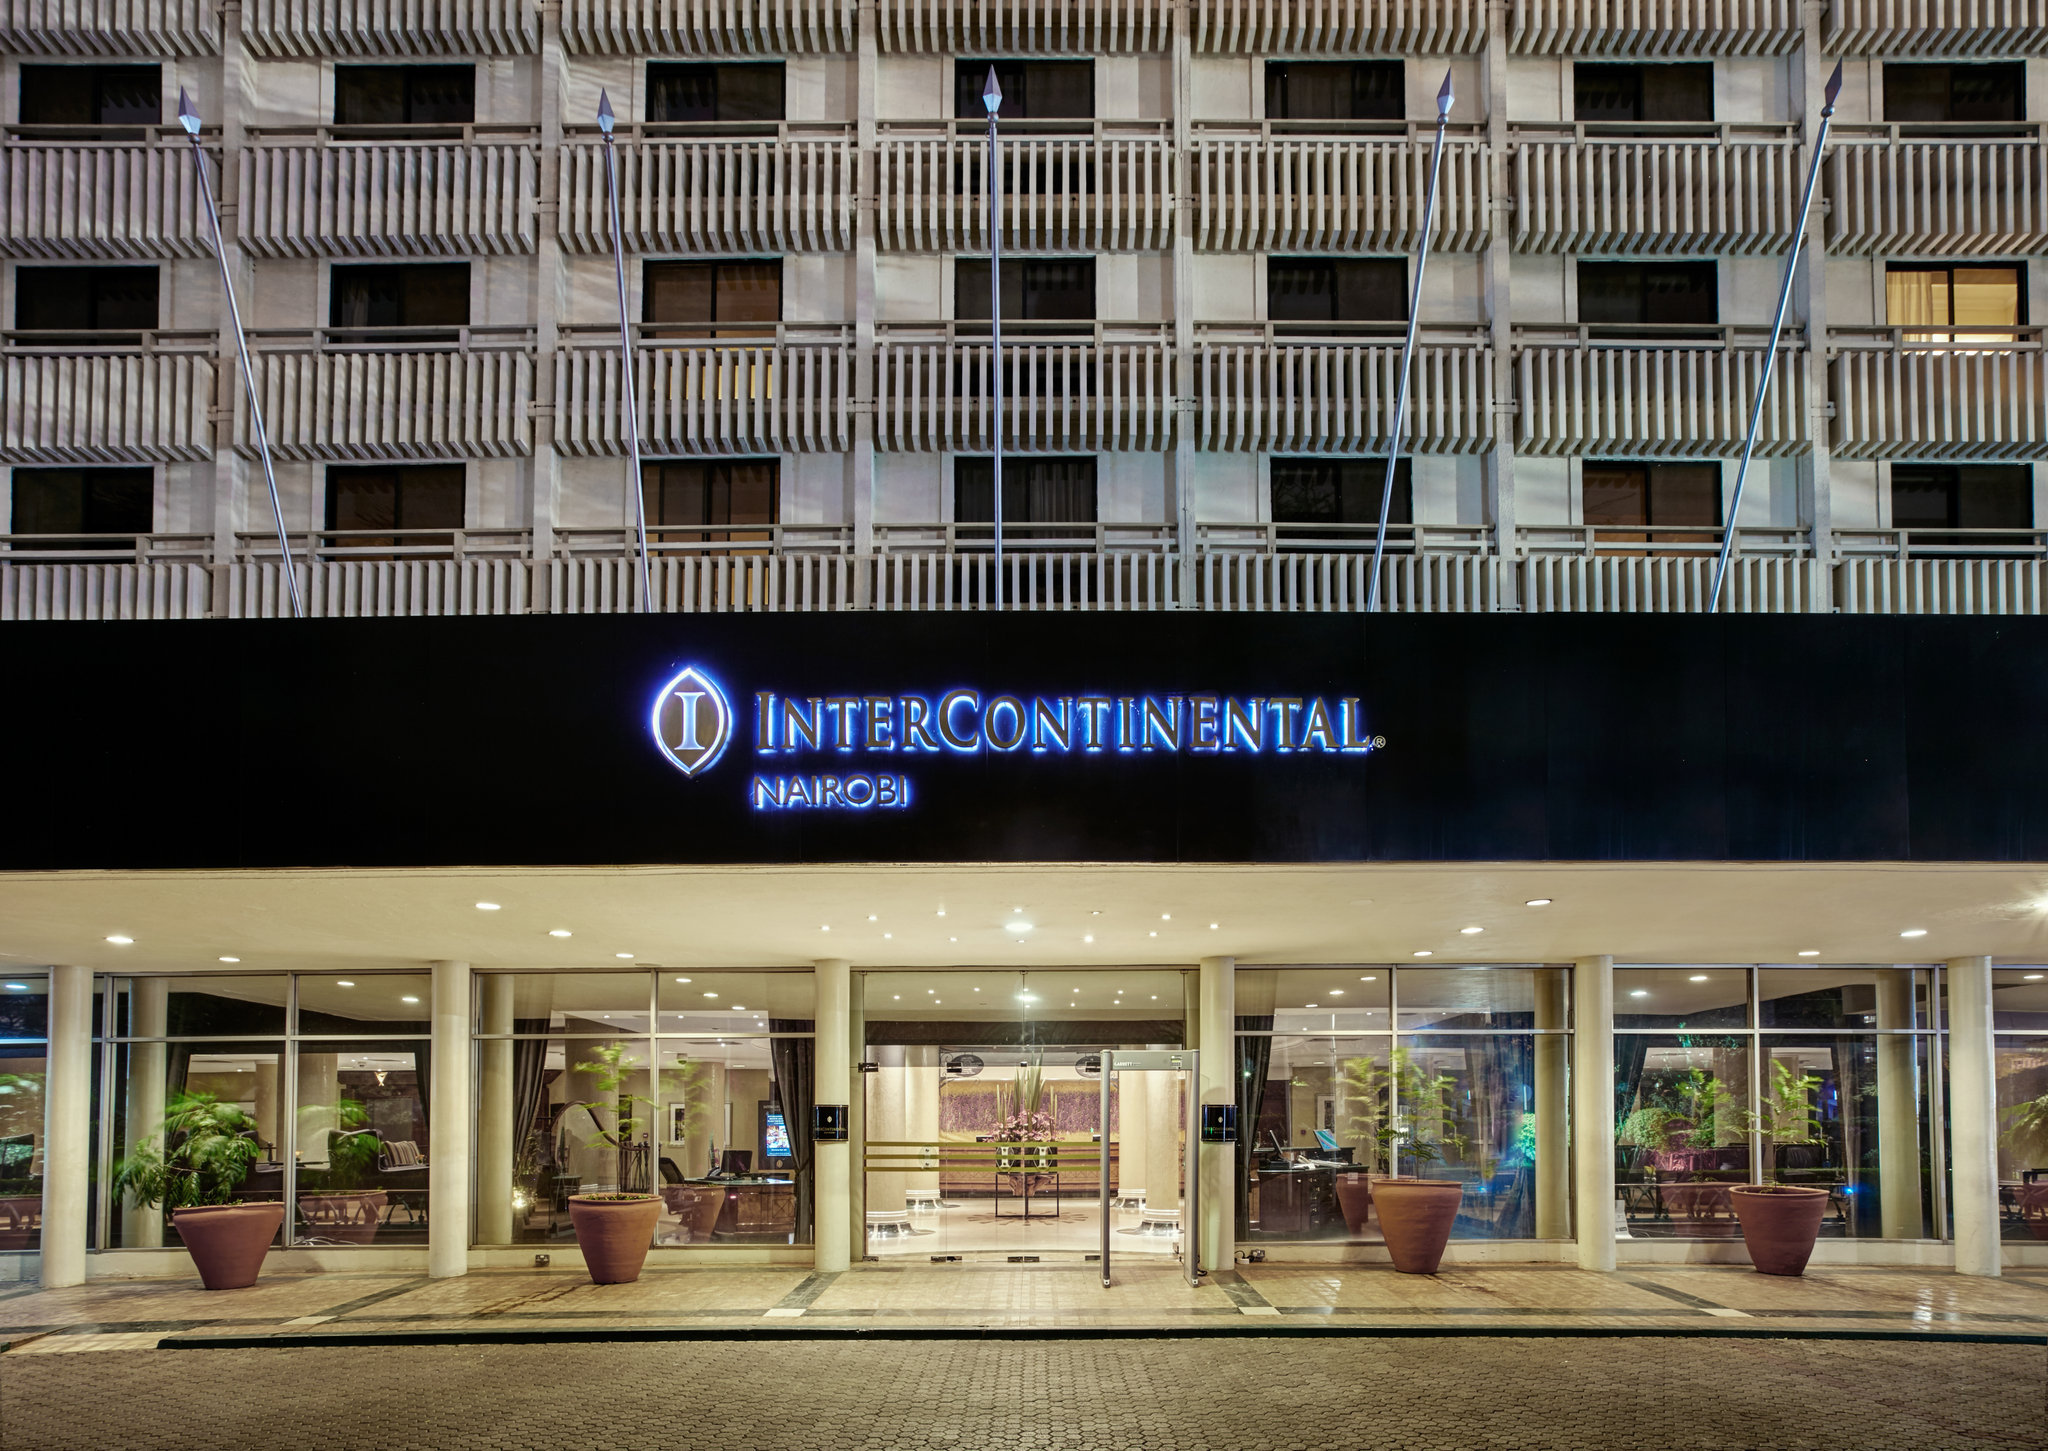 InterContinental Hotels NAIROBI